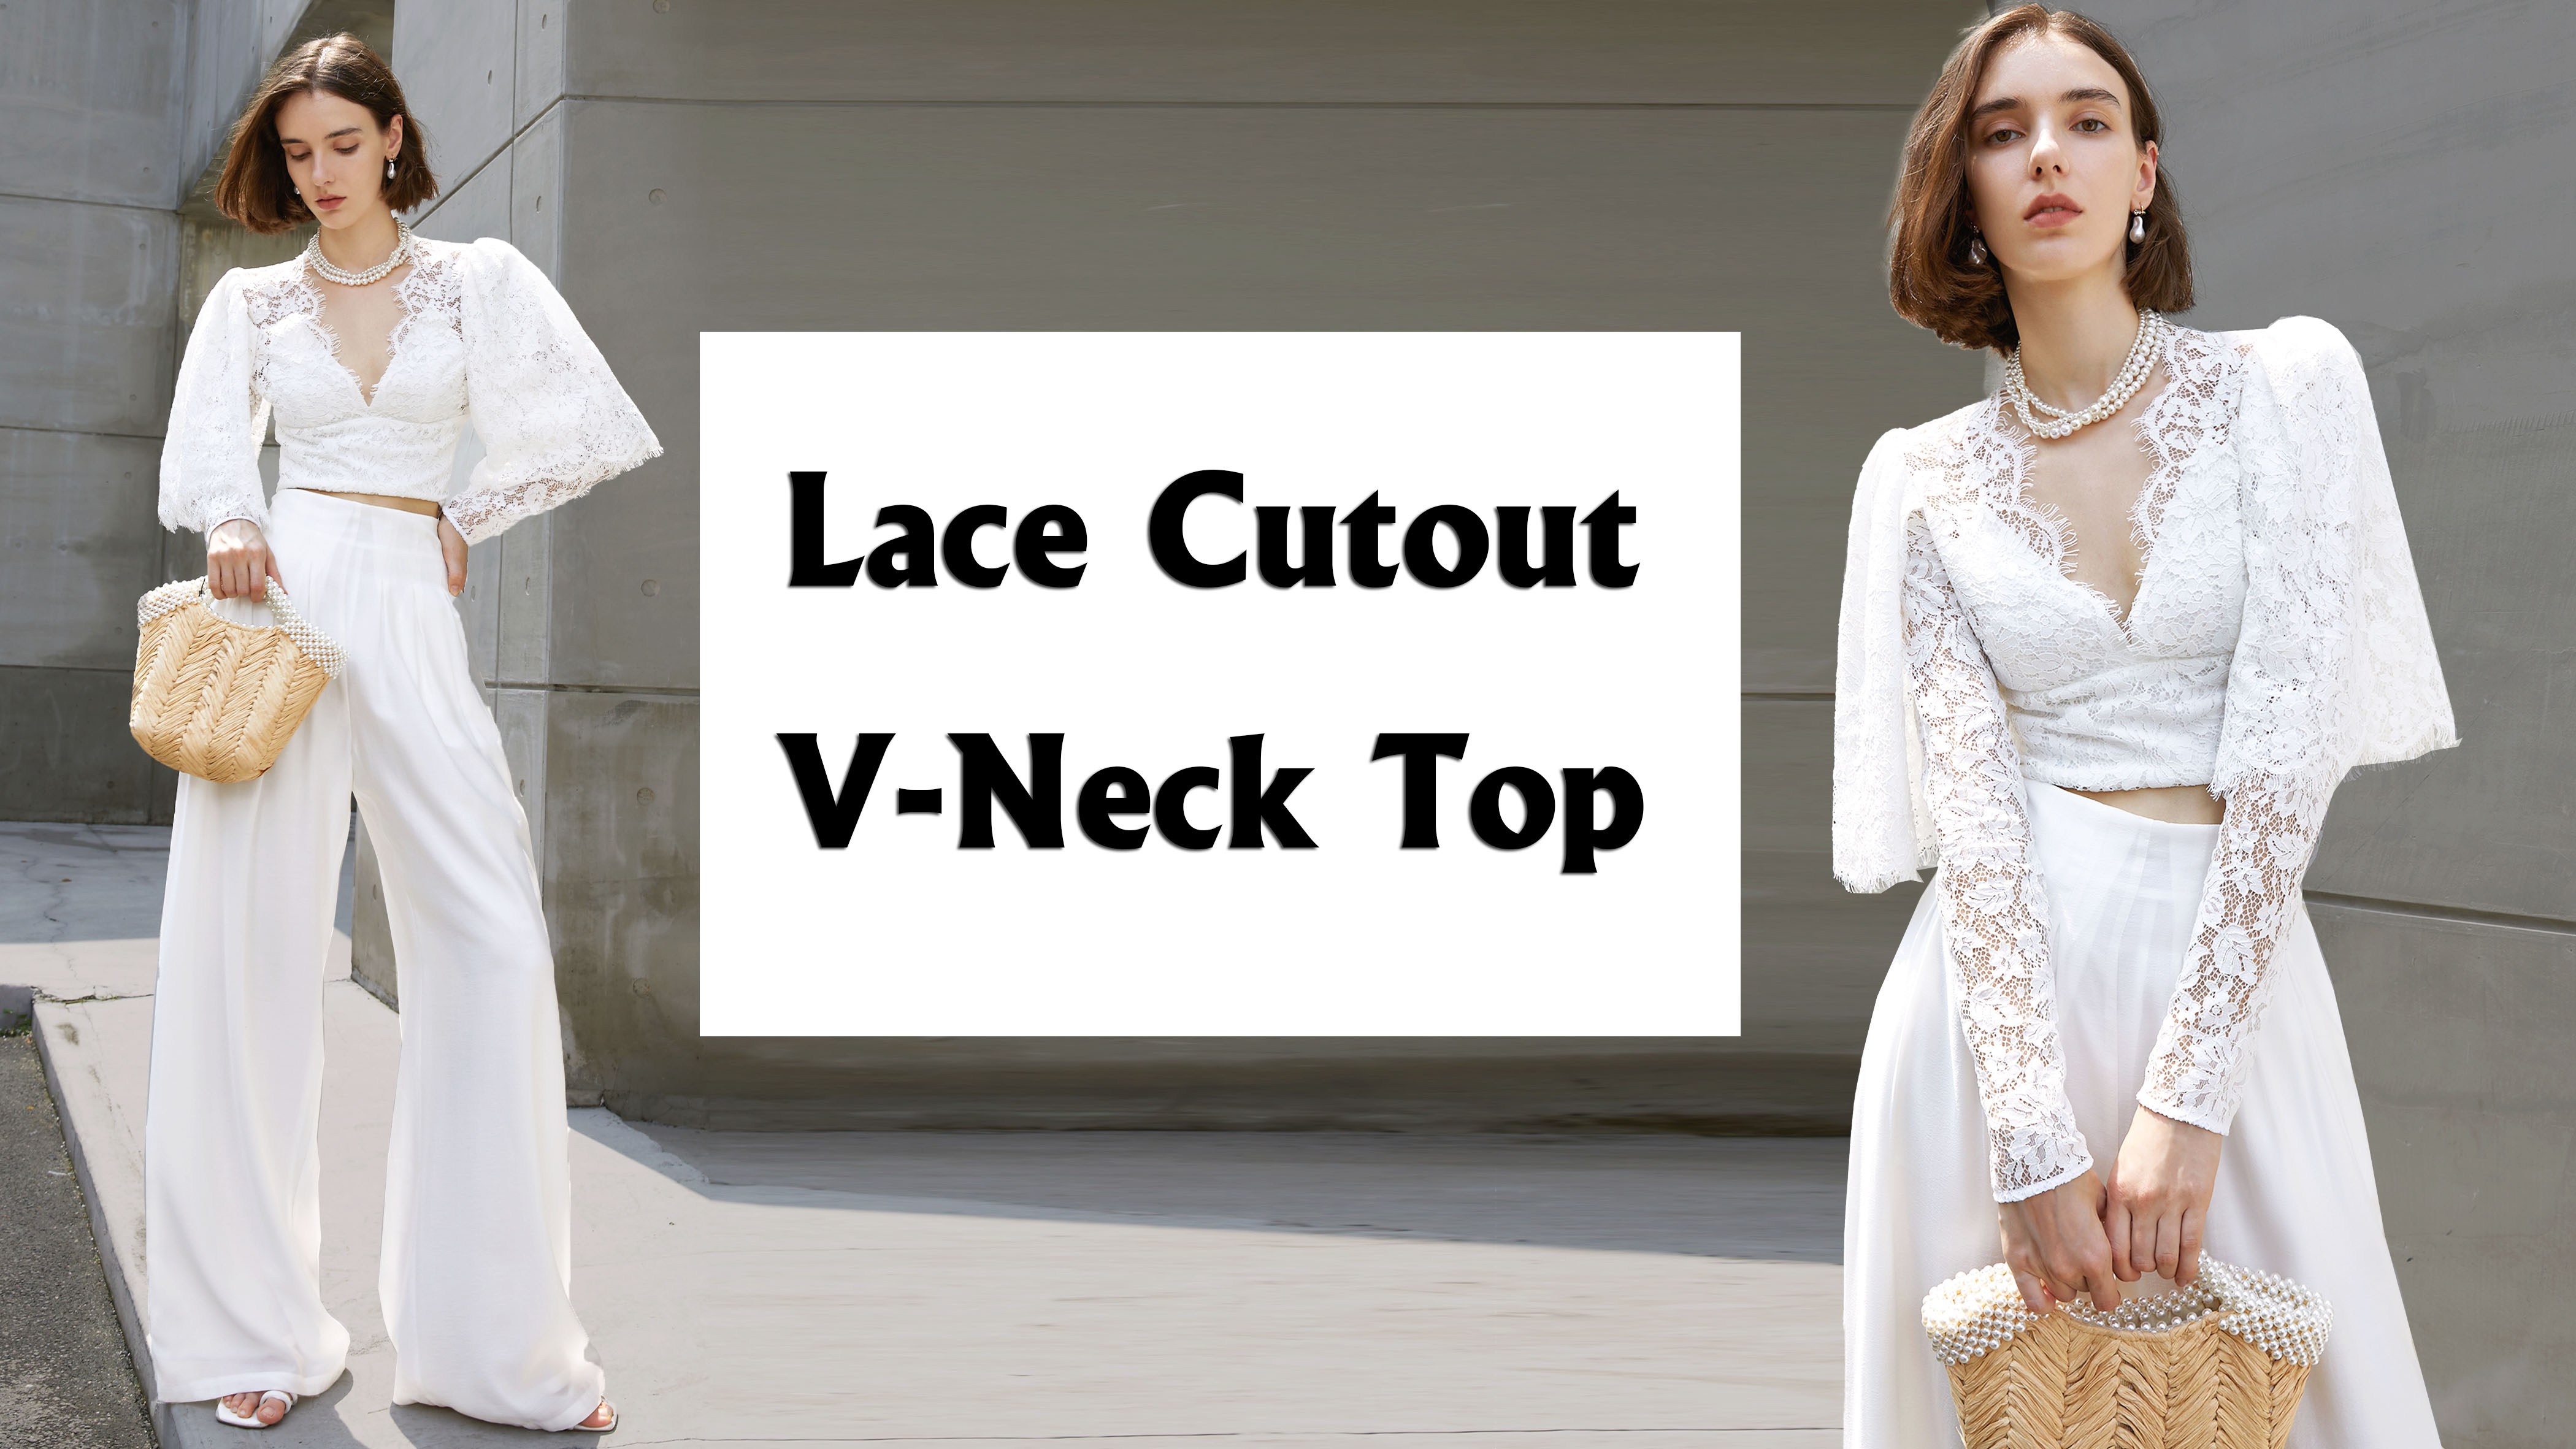 Quality Lace Cutout V-Neck Top Manufacturer |Auschalink